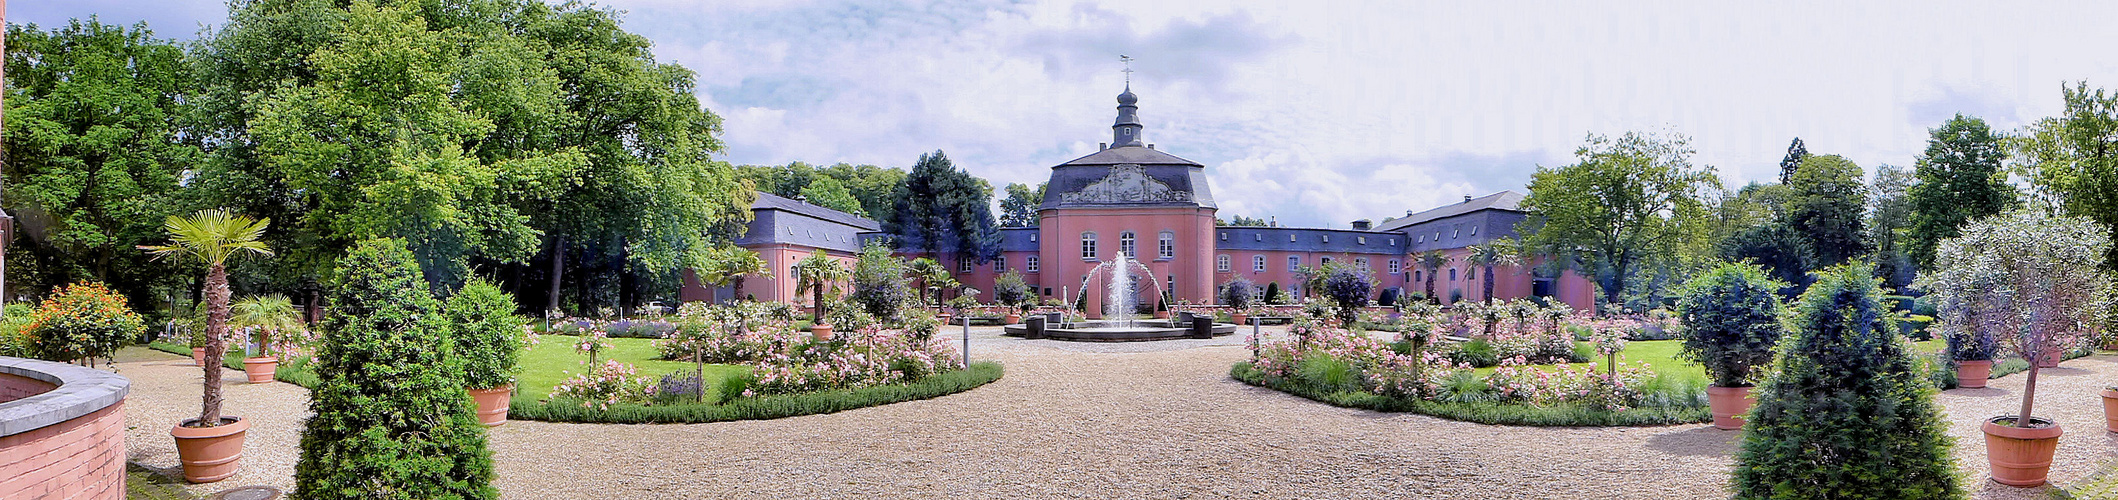 Panorama Schloss Wickrath